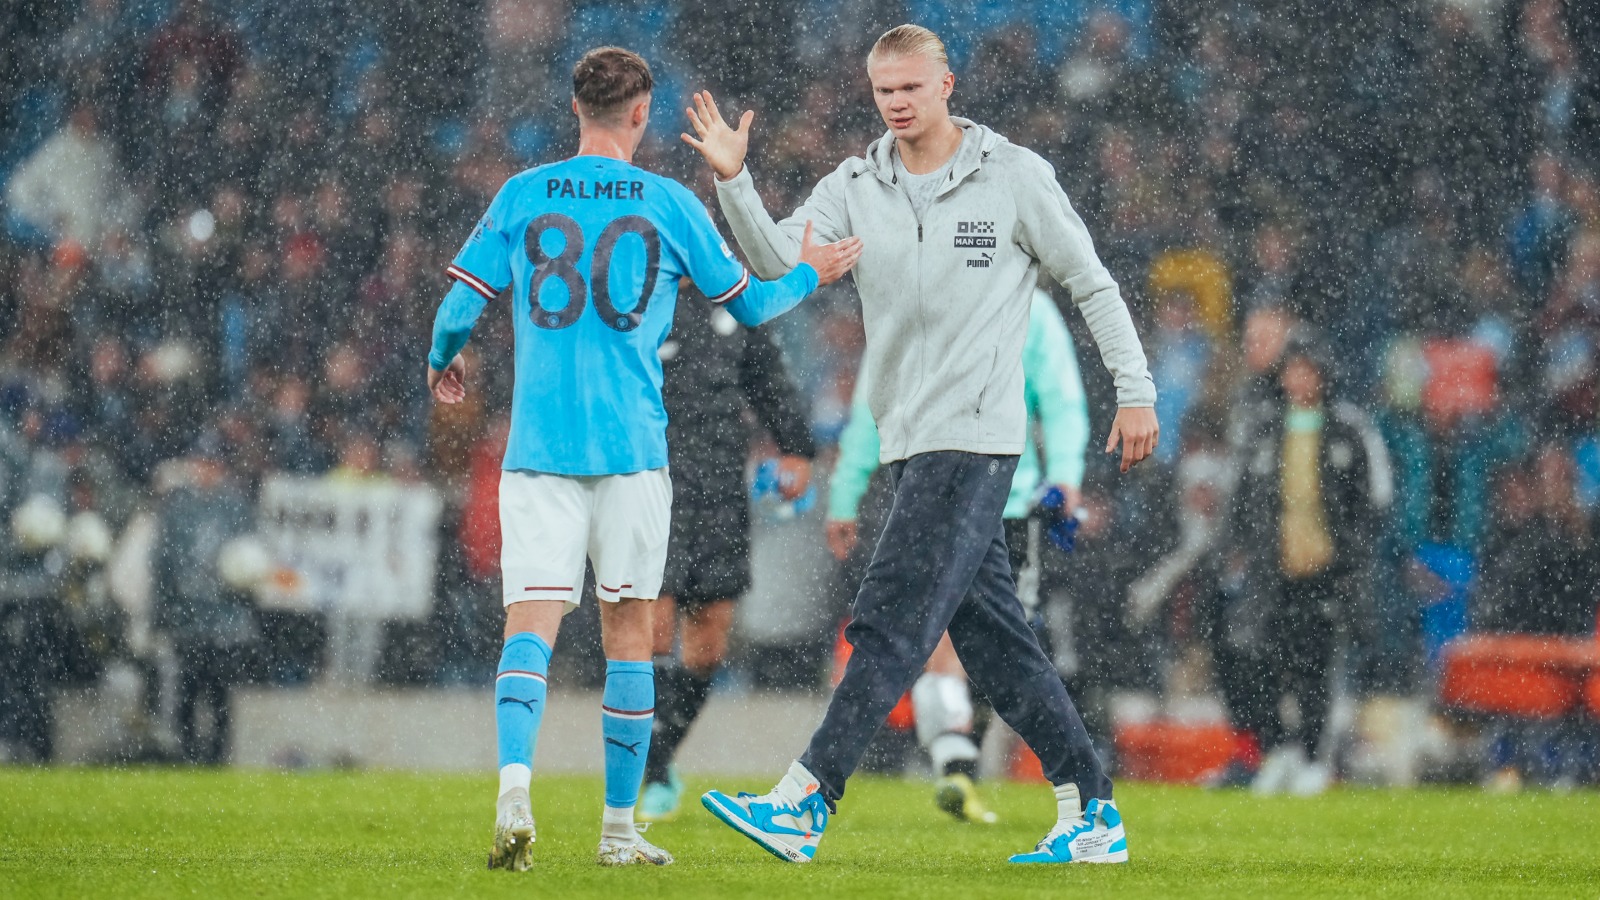 Manchester City - HE'S BACK!!! 🩵 5-0 ⚫️ #ManCity